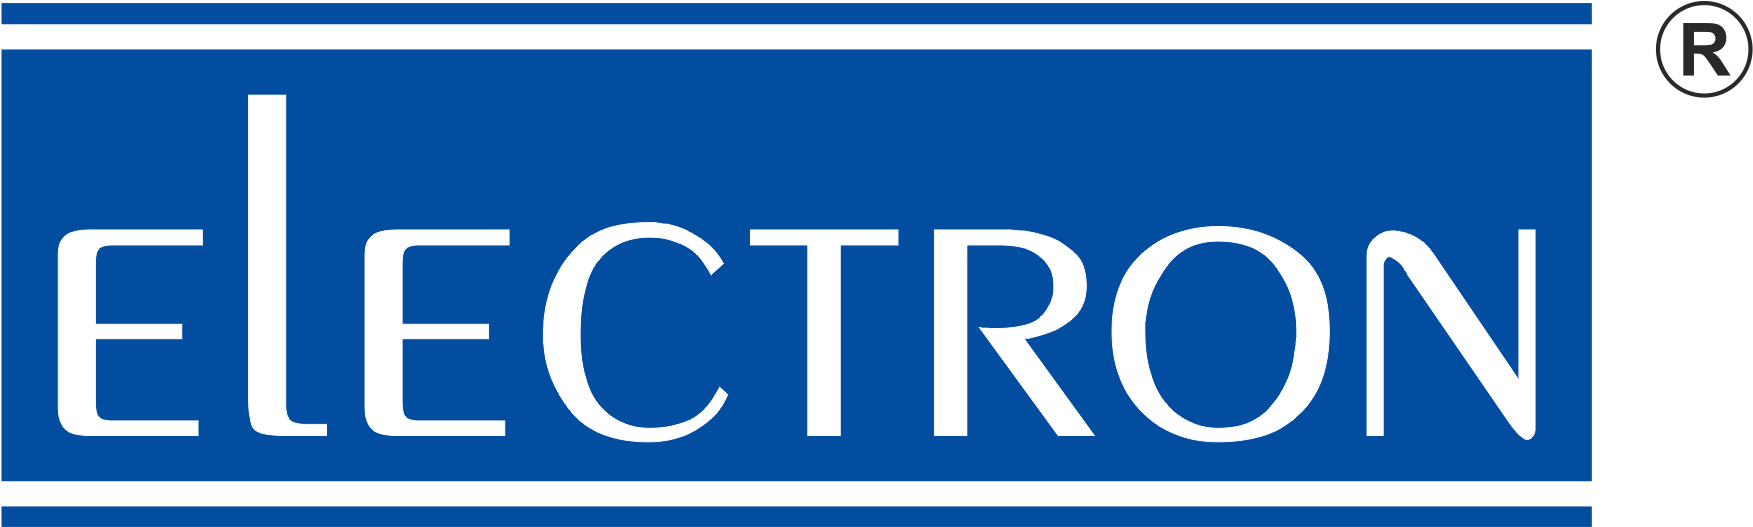 Electron-logo